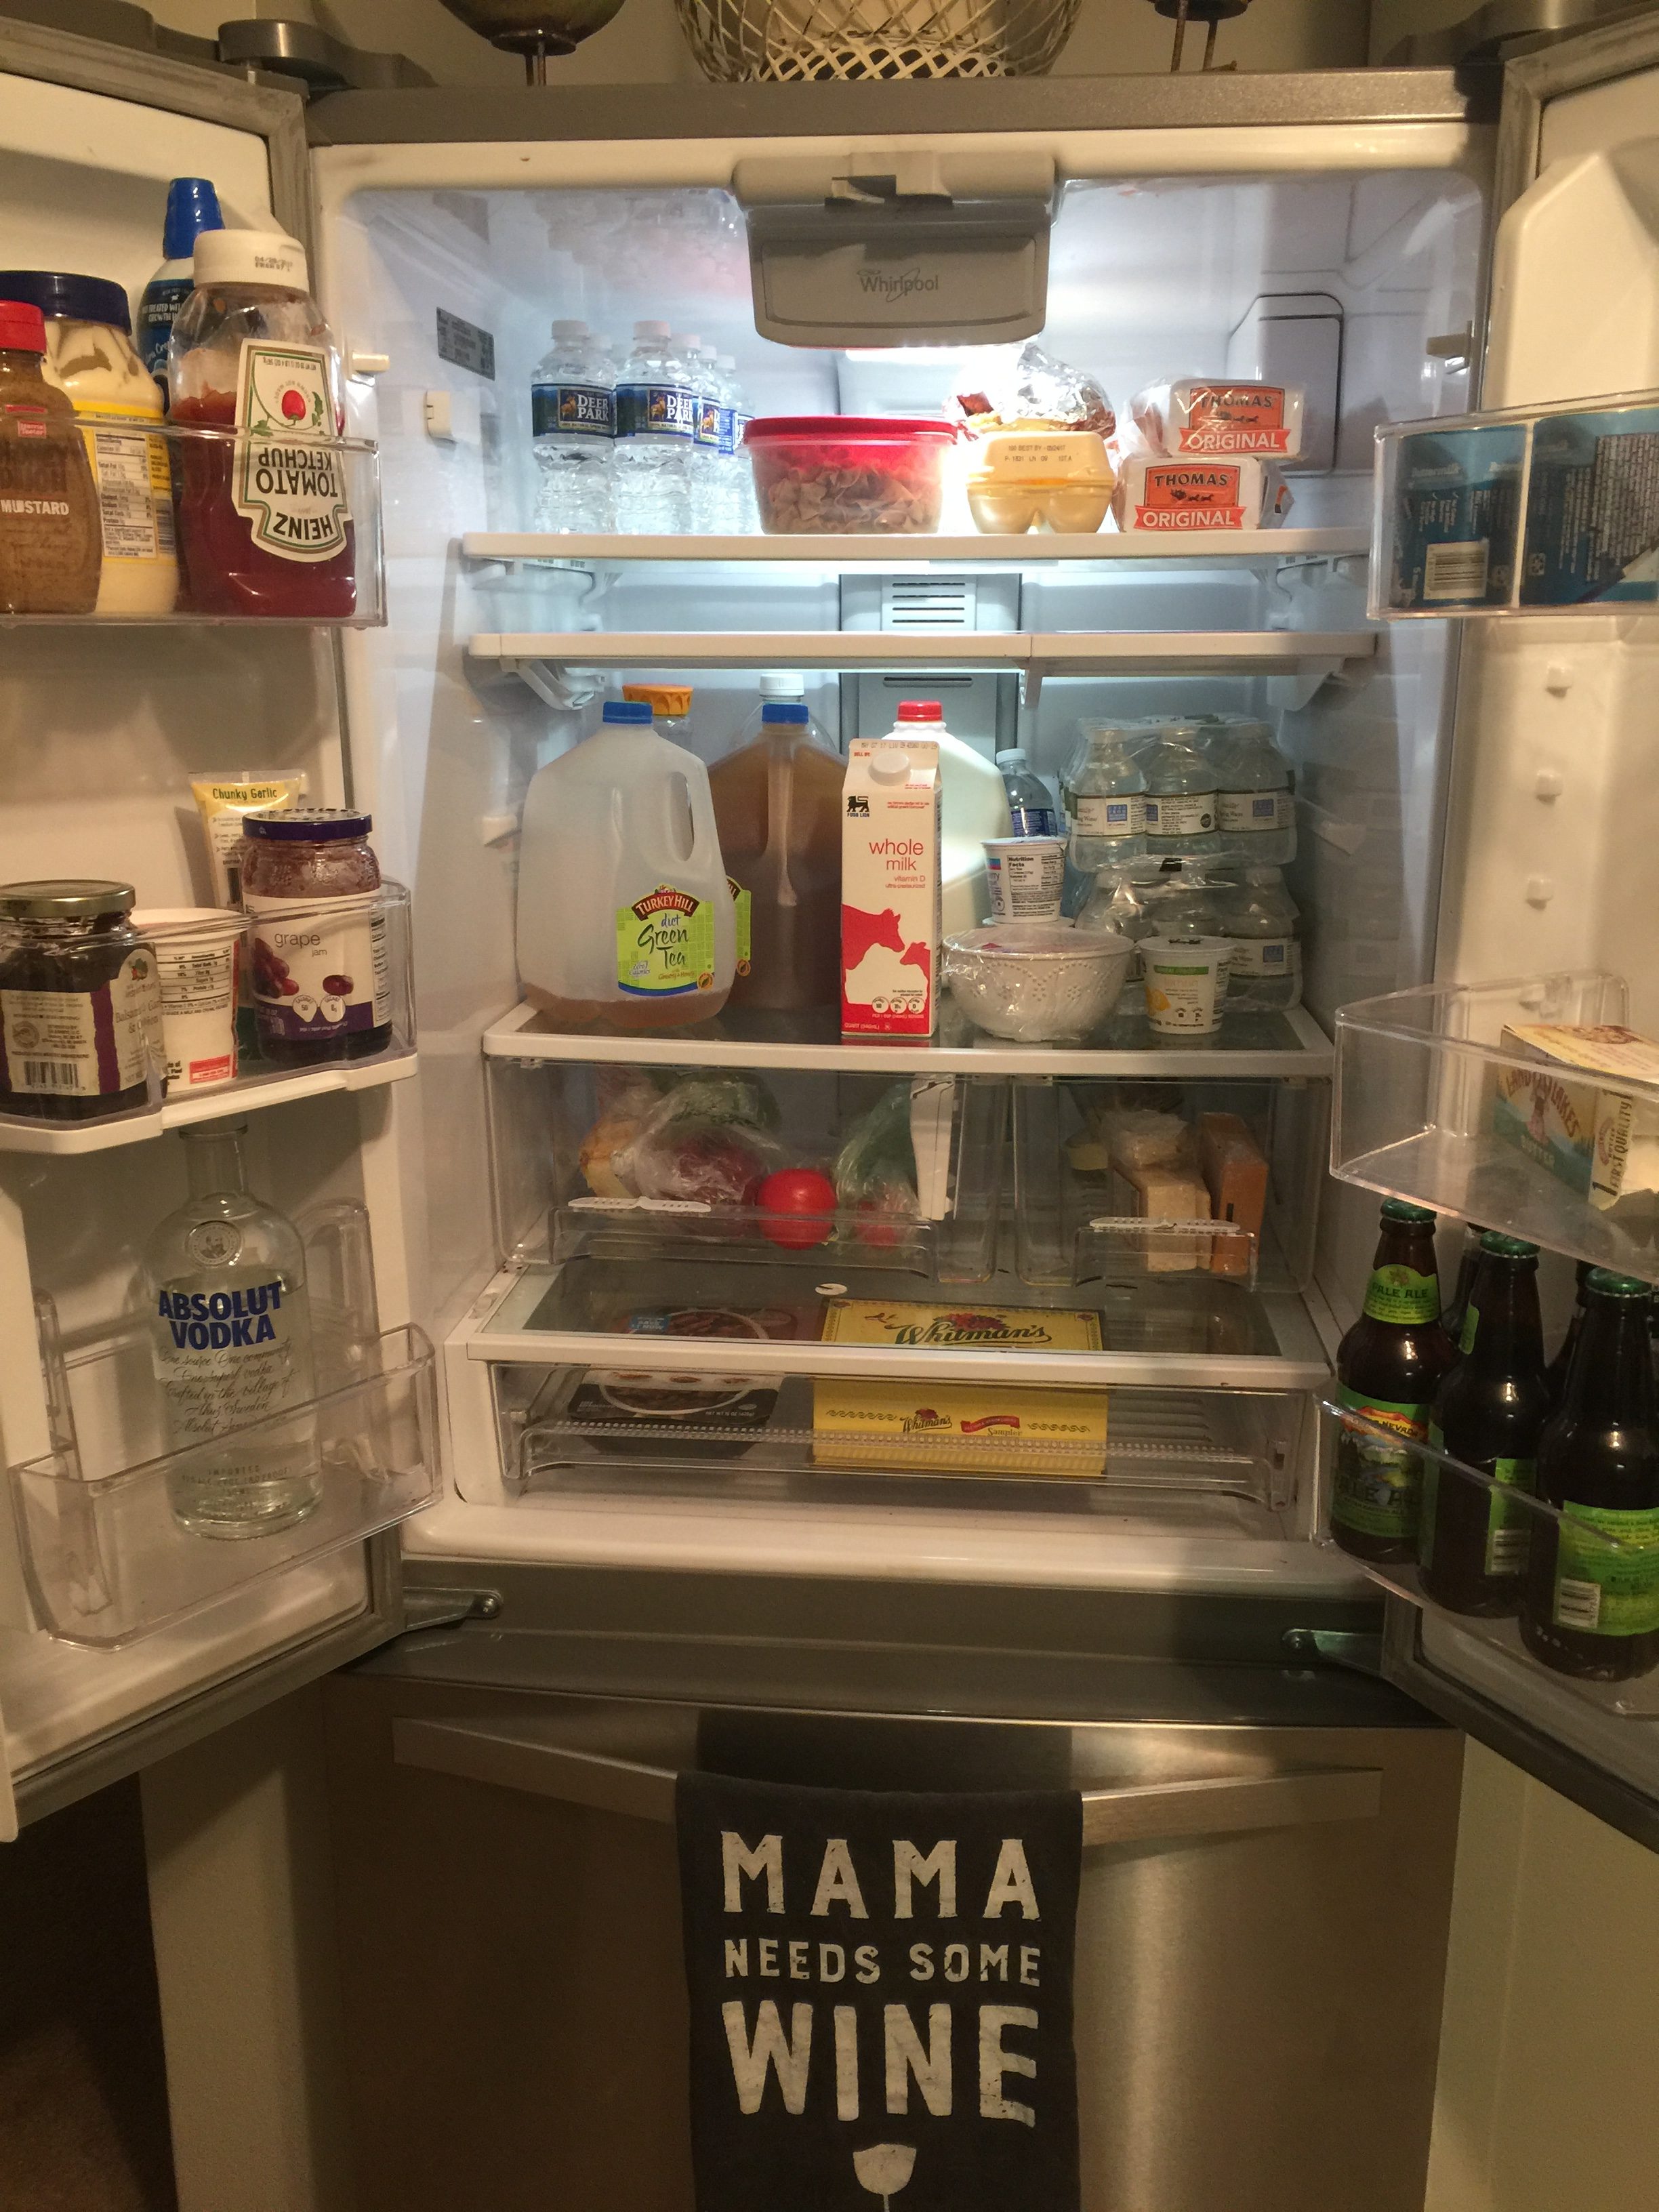 Grandma, the fridge is full